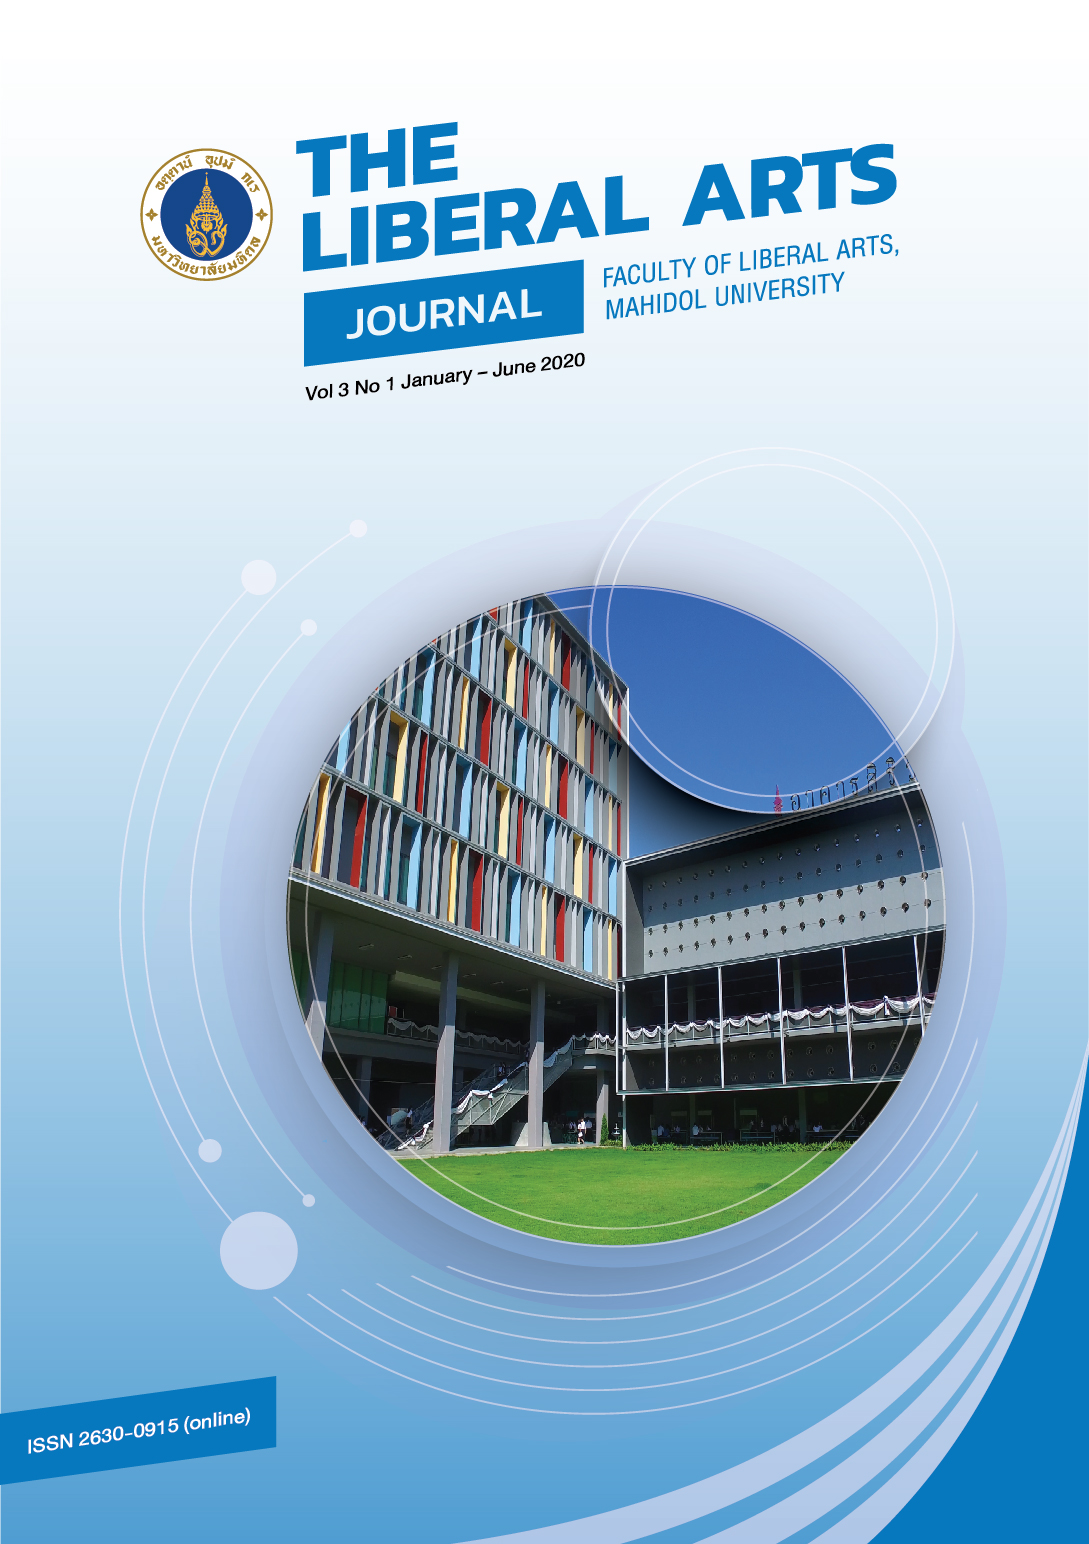 					View Vol. 3 No. 1 (2020): The Liberal Arts Journal, Mahidol University
				